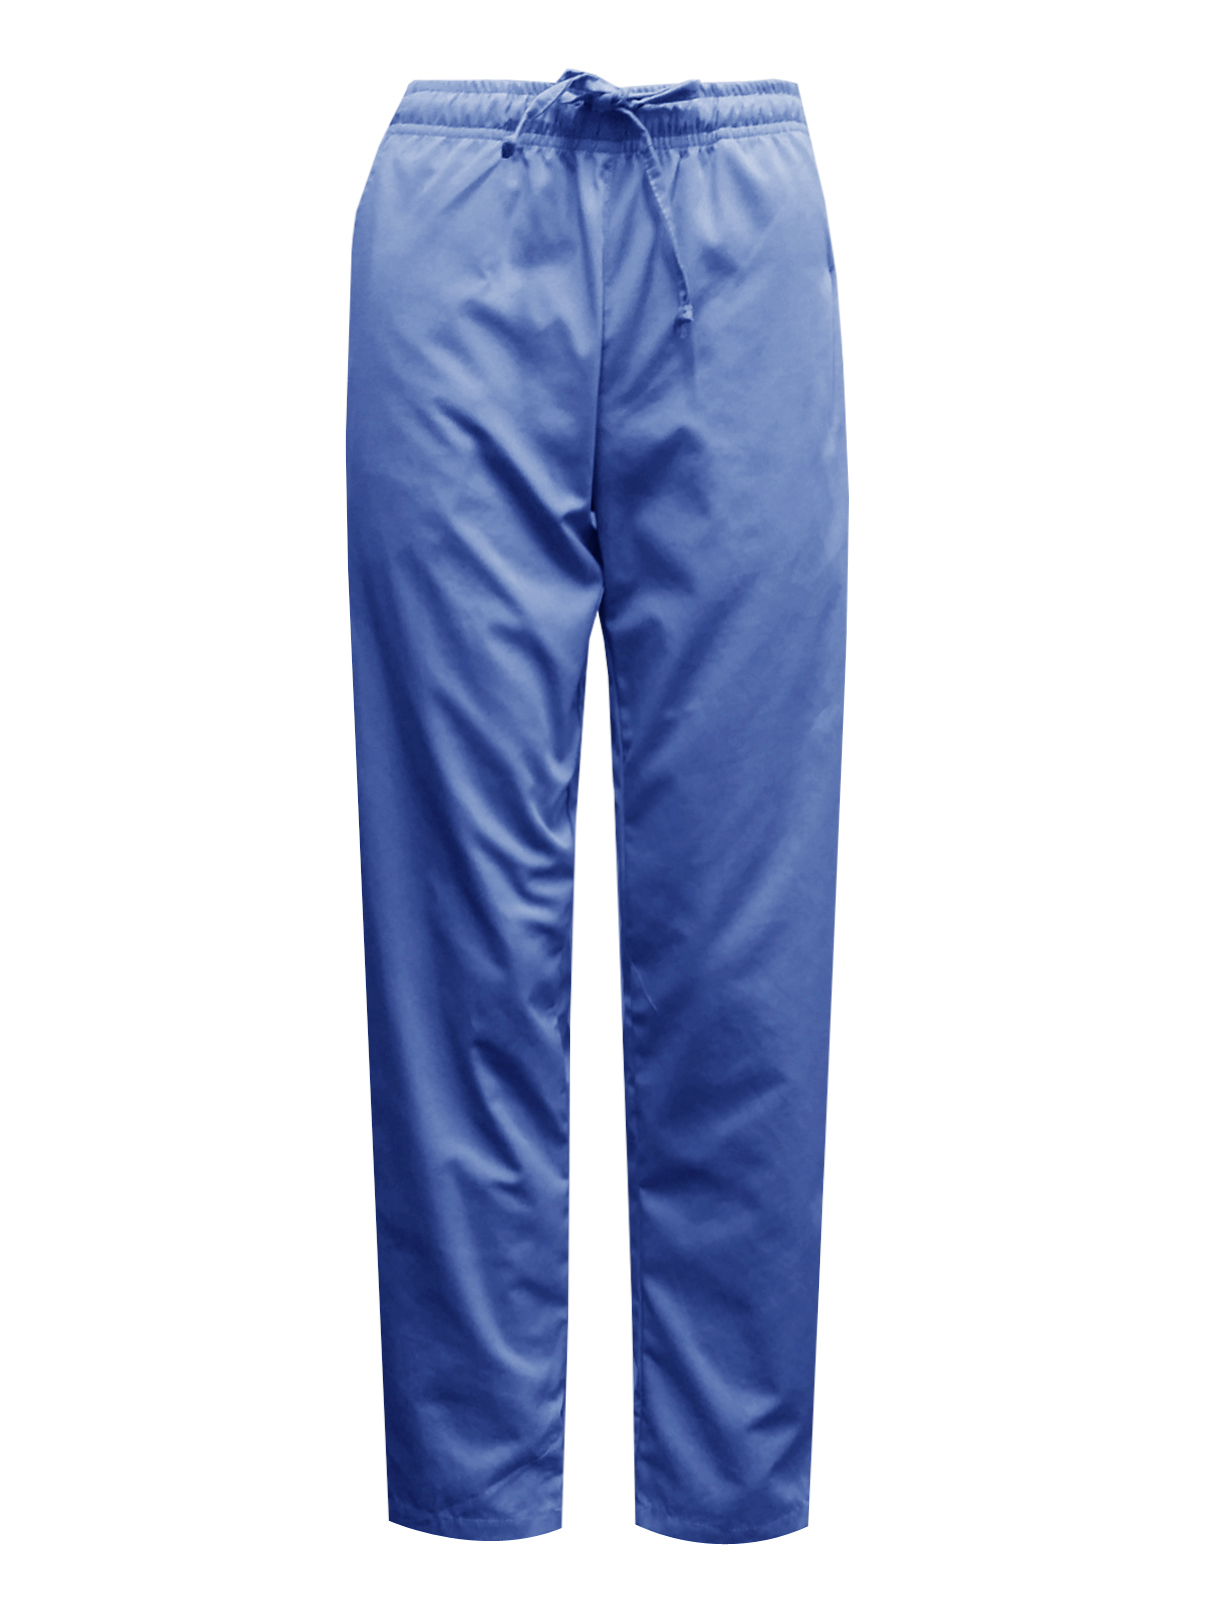 BKMDS04P – Royal Blue Scrub Pants – Uniform Online